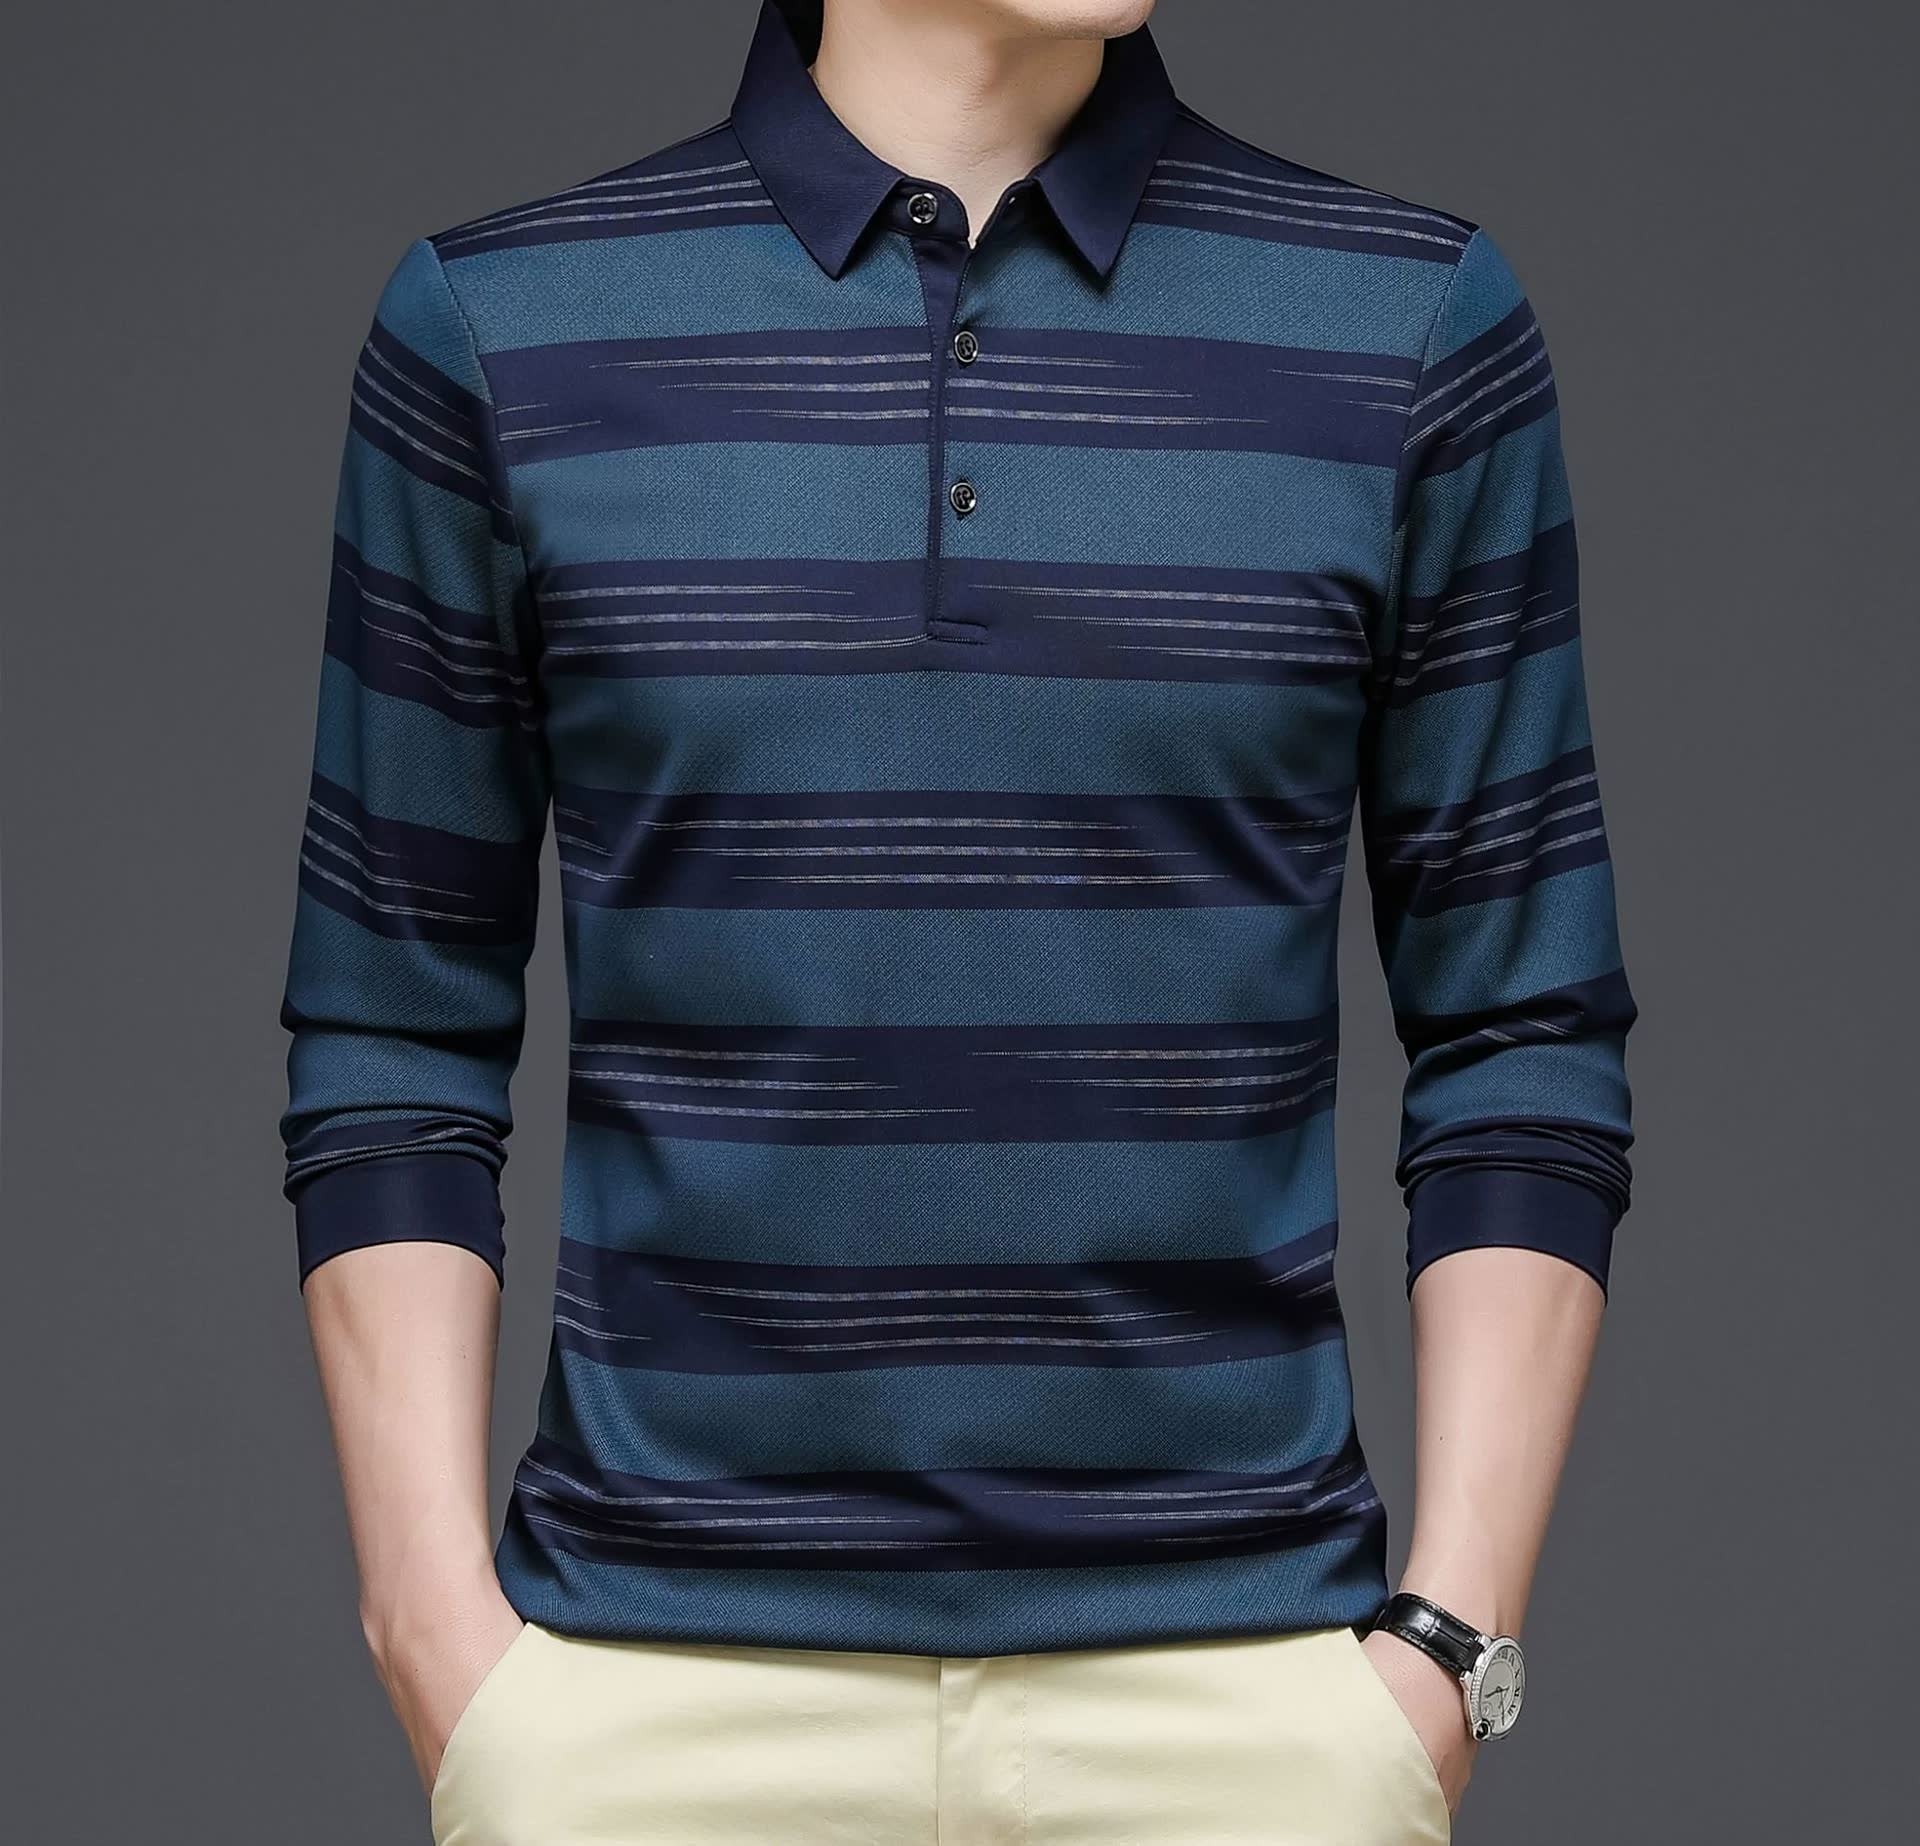 Geestig Wardianzaak bak Men's Middle-aged Autumn Lapel Base Stripe Loose Business Polo Shirt | eBay